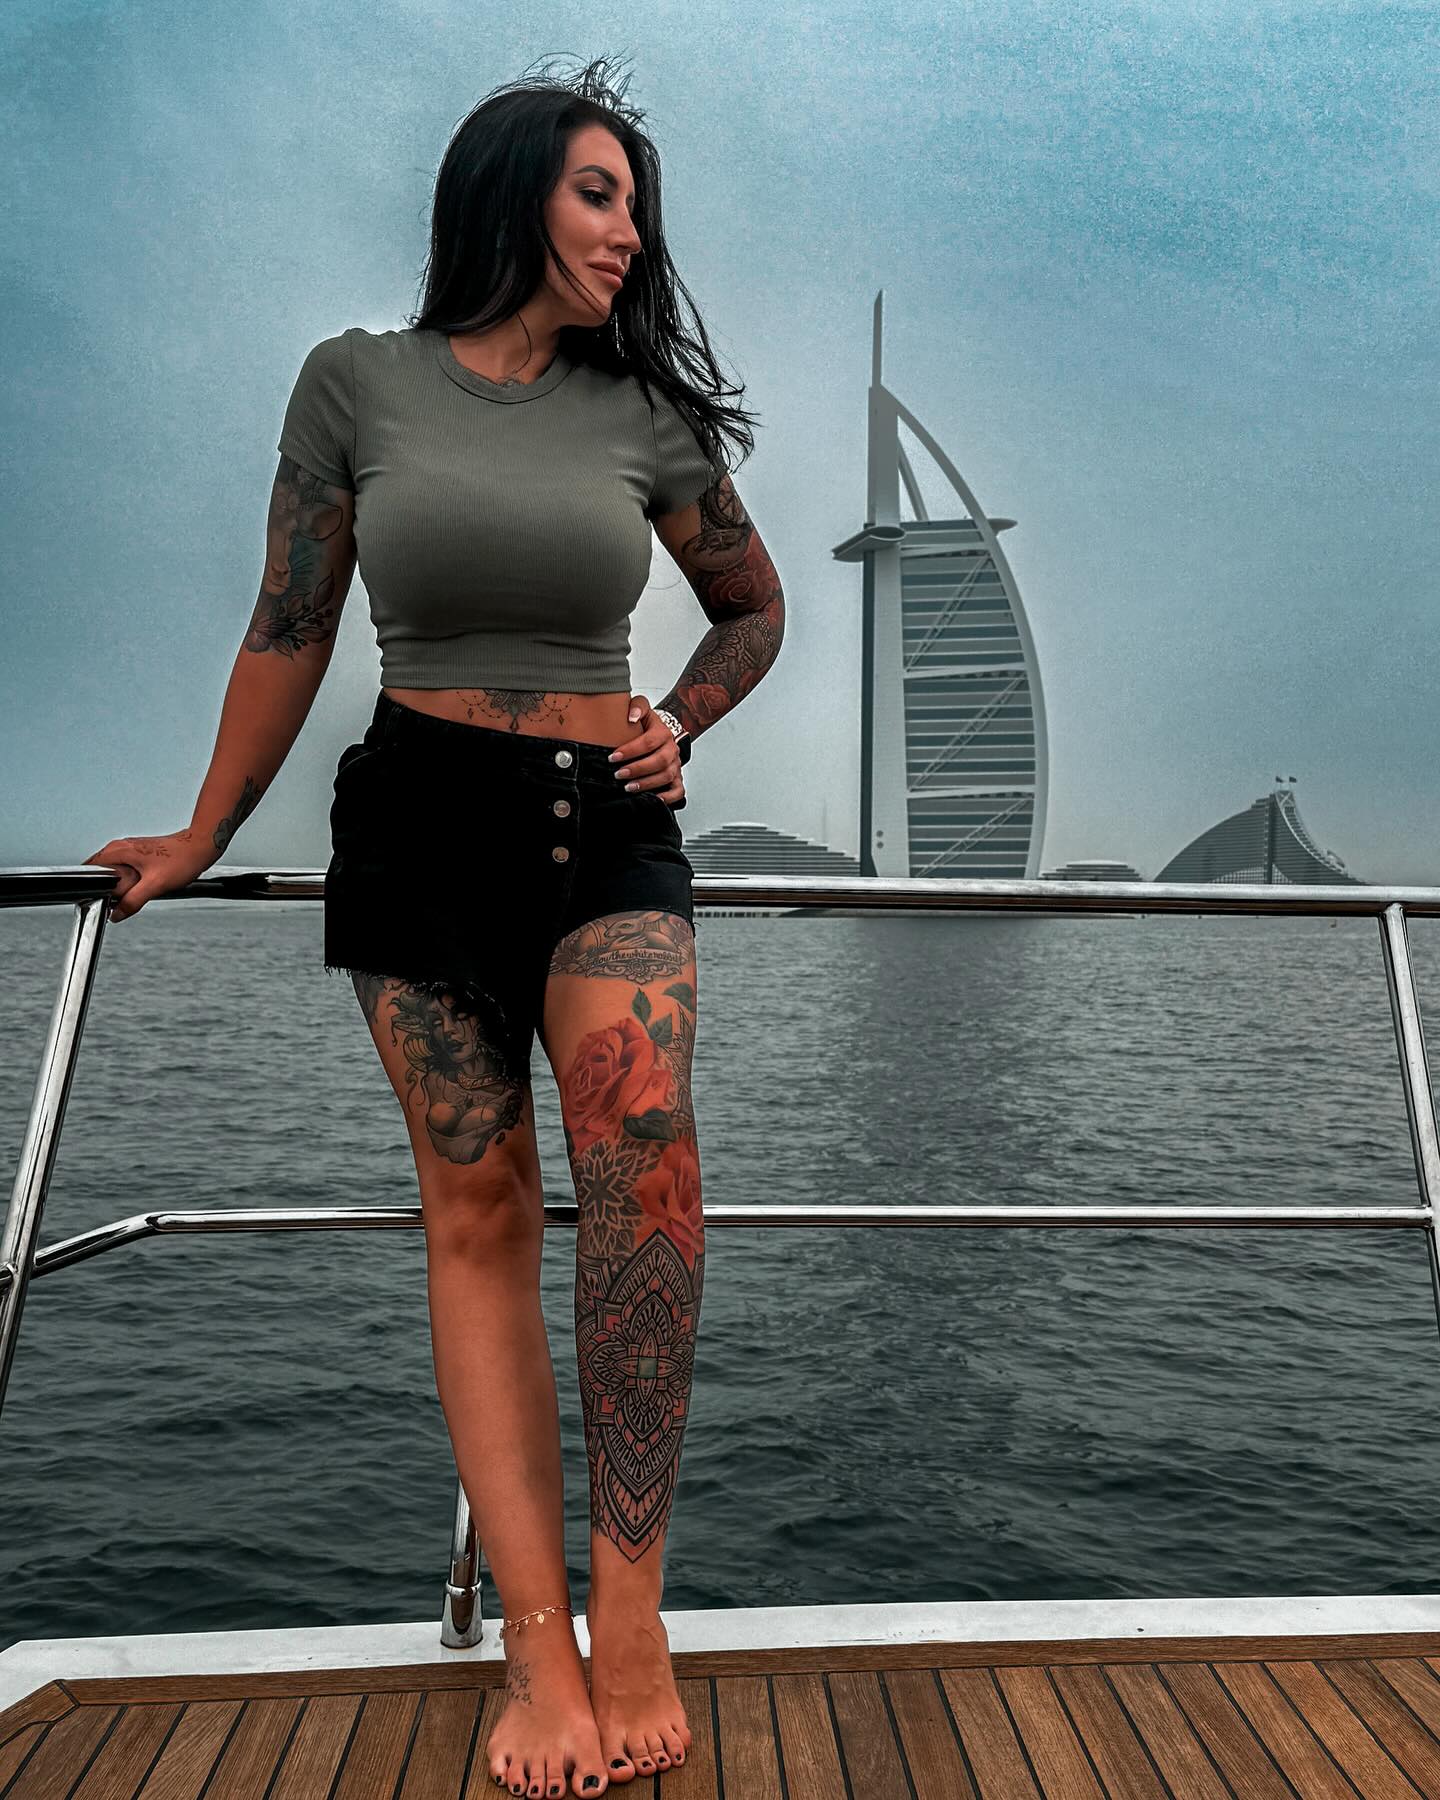 Yacht-Ausflug 🛥️ 

#dubai #dubailife #yacht #happyday #trip #inkedbabe #tattooed #portz #port #portrait #dubaimarina #dubailifestyle